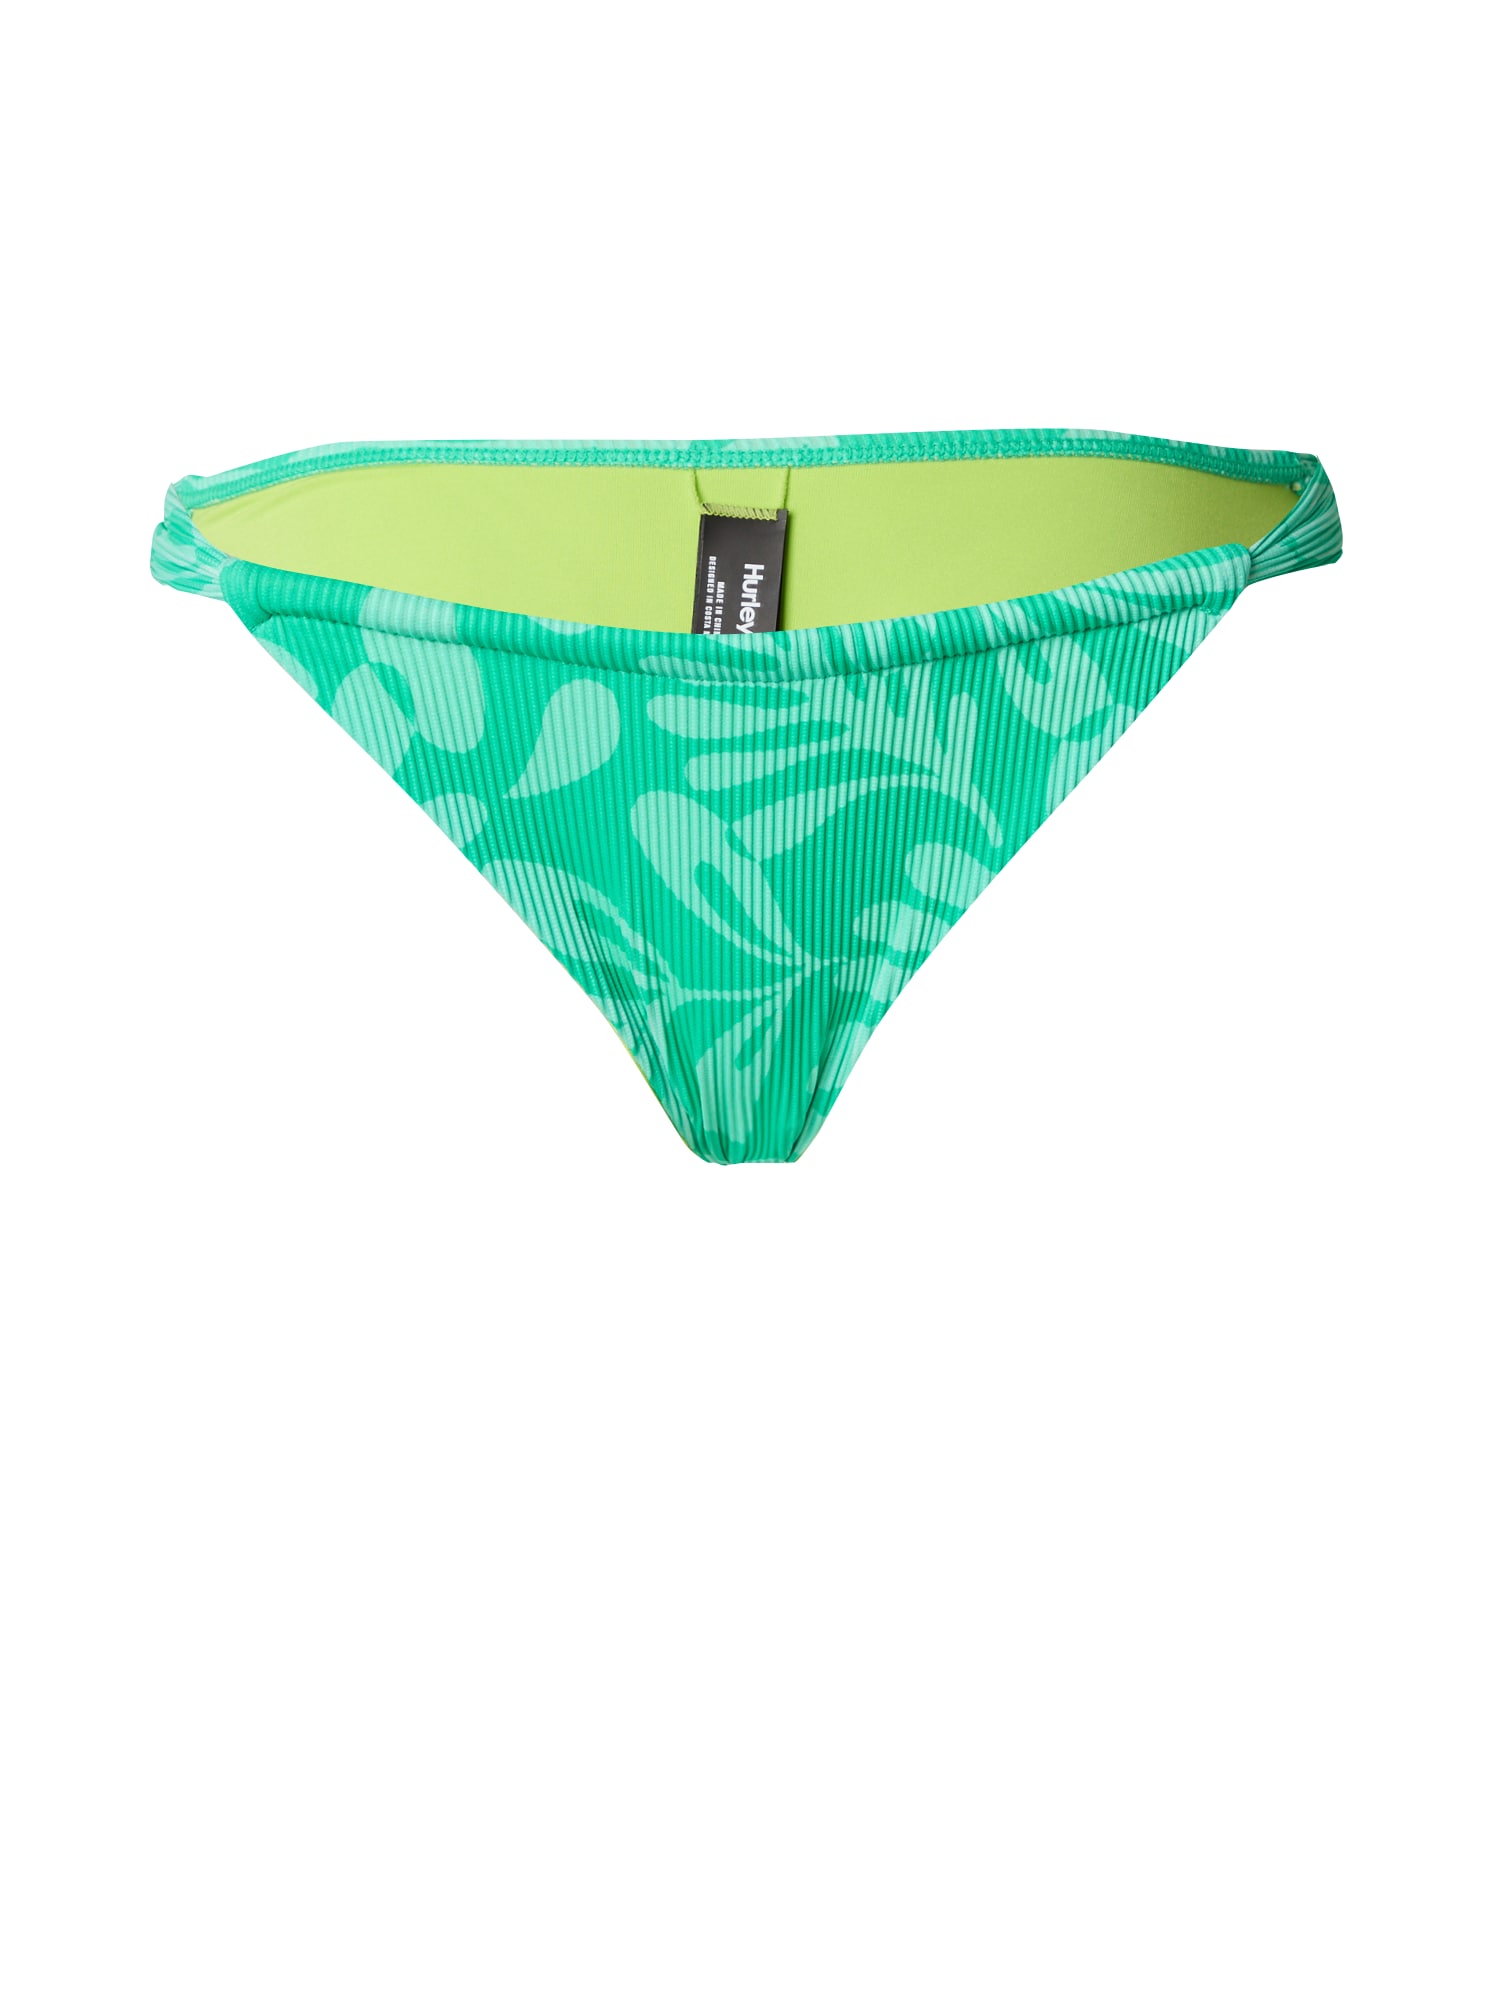 Hurley Sport bikini nadrág  zöld / világoszöld